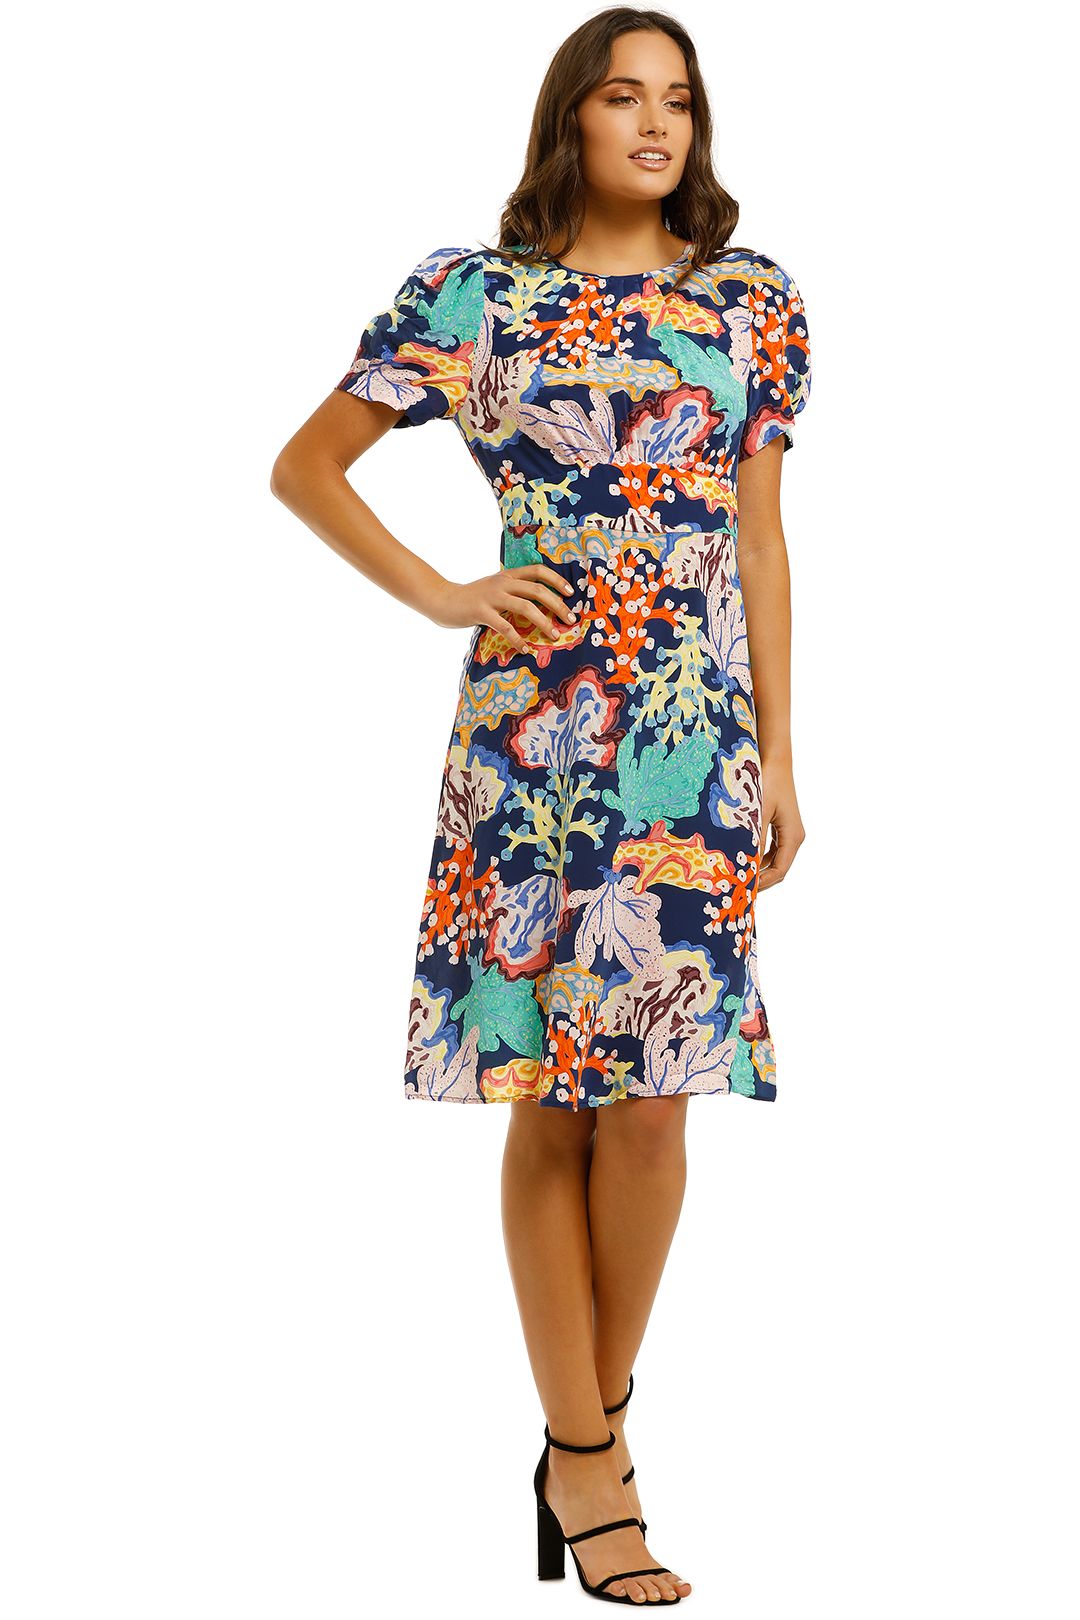 Floral Coral Dress in Multi by Gorman for Rent | GlamCorner